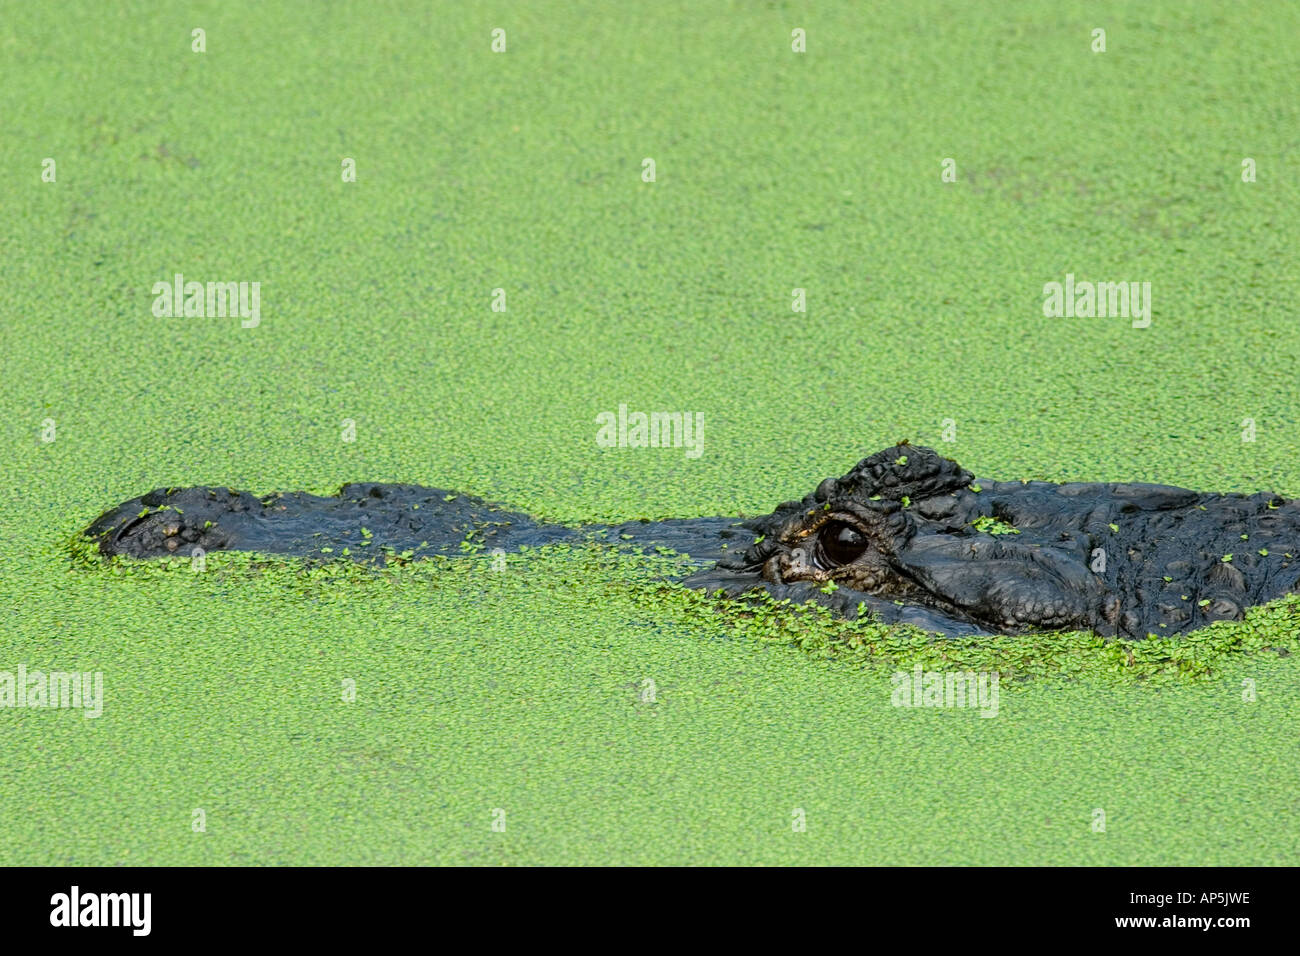 USA, Florida, Jacksonville zoo, American alligator in duck weed, Alligator mississippiensis Stock Photo